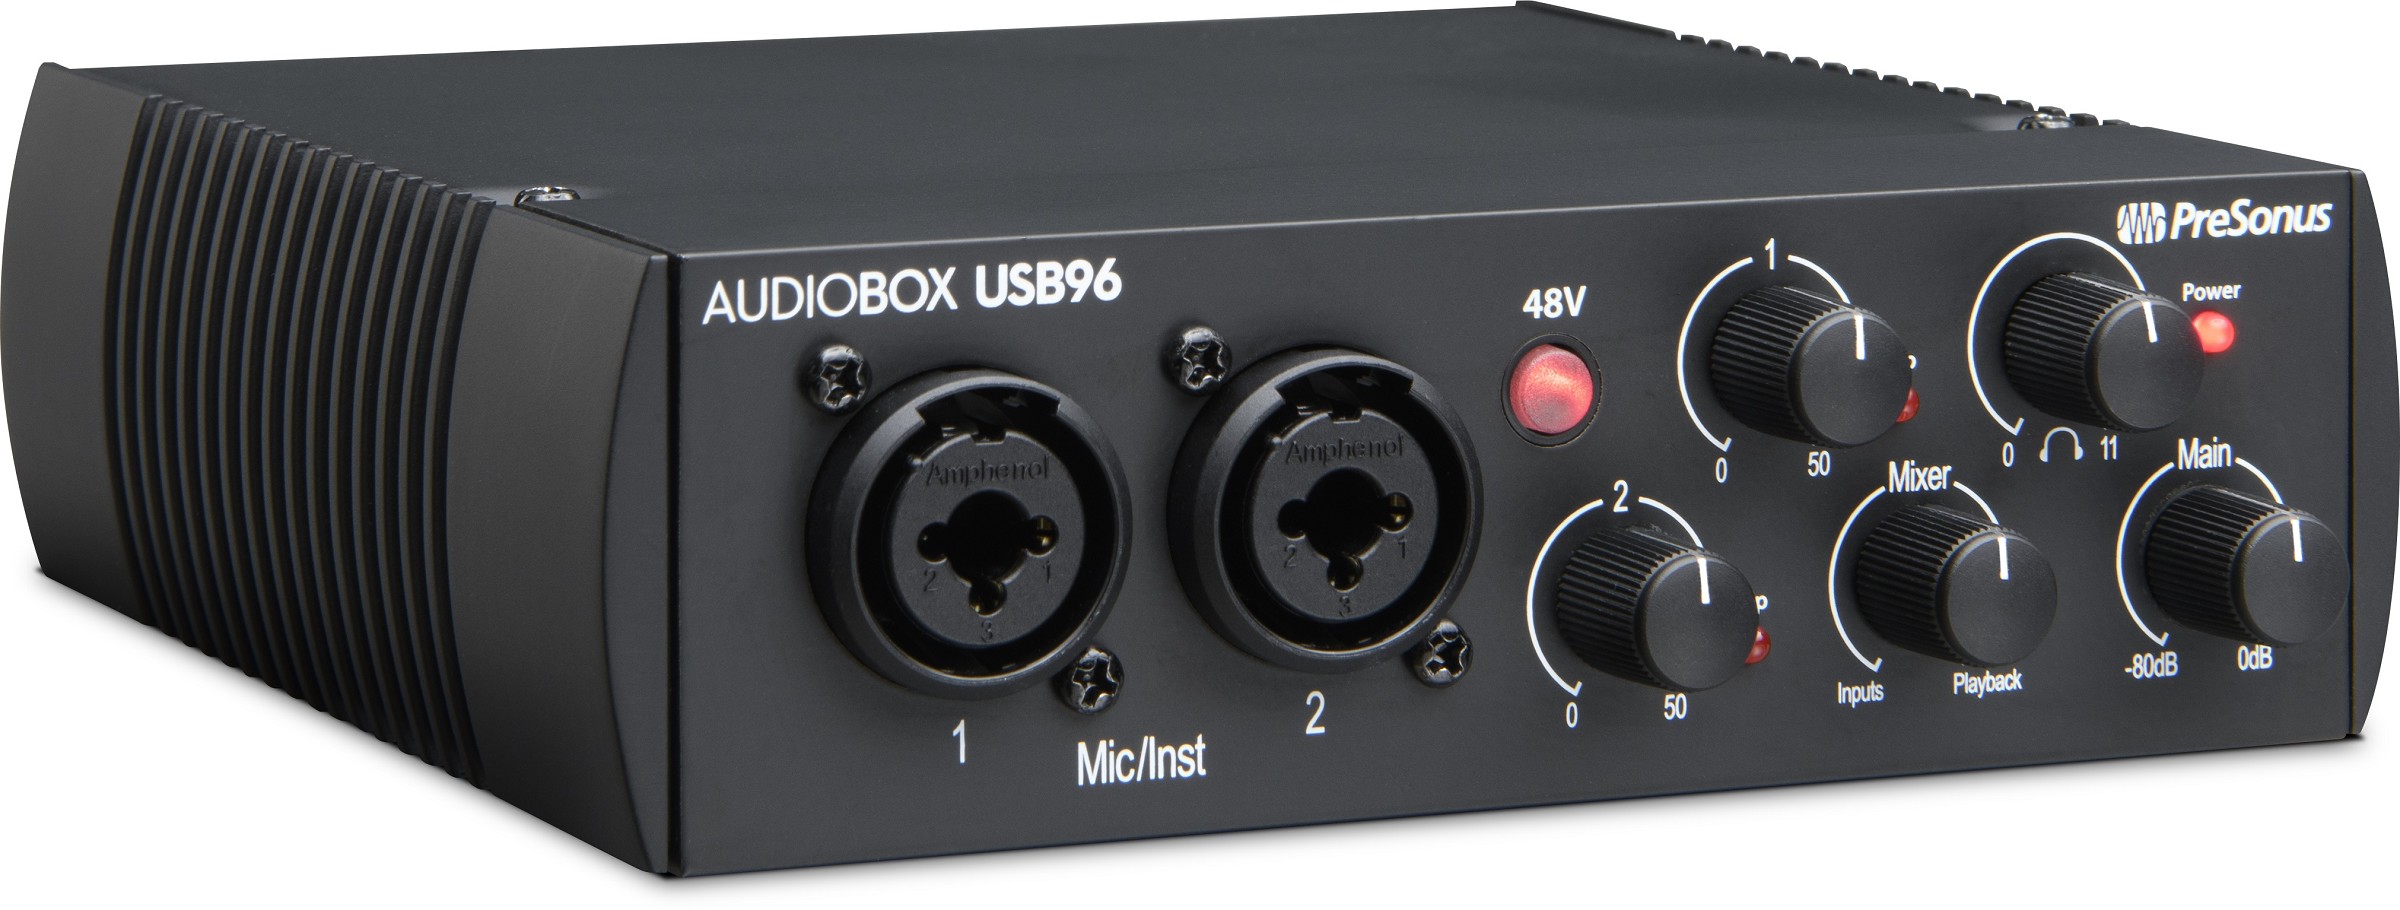 Presonus AudioBox USB 96 25th Anniversarx Edition